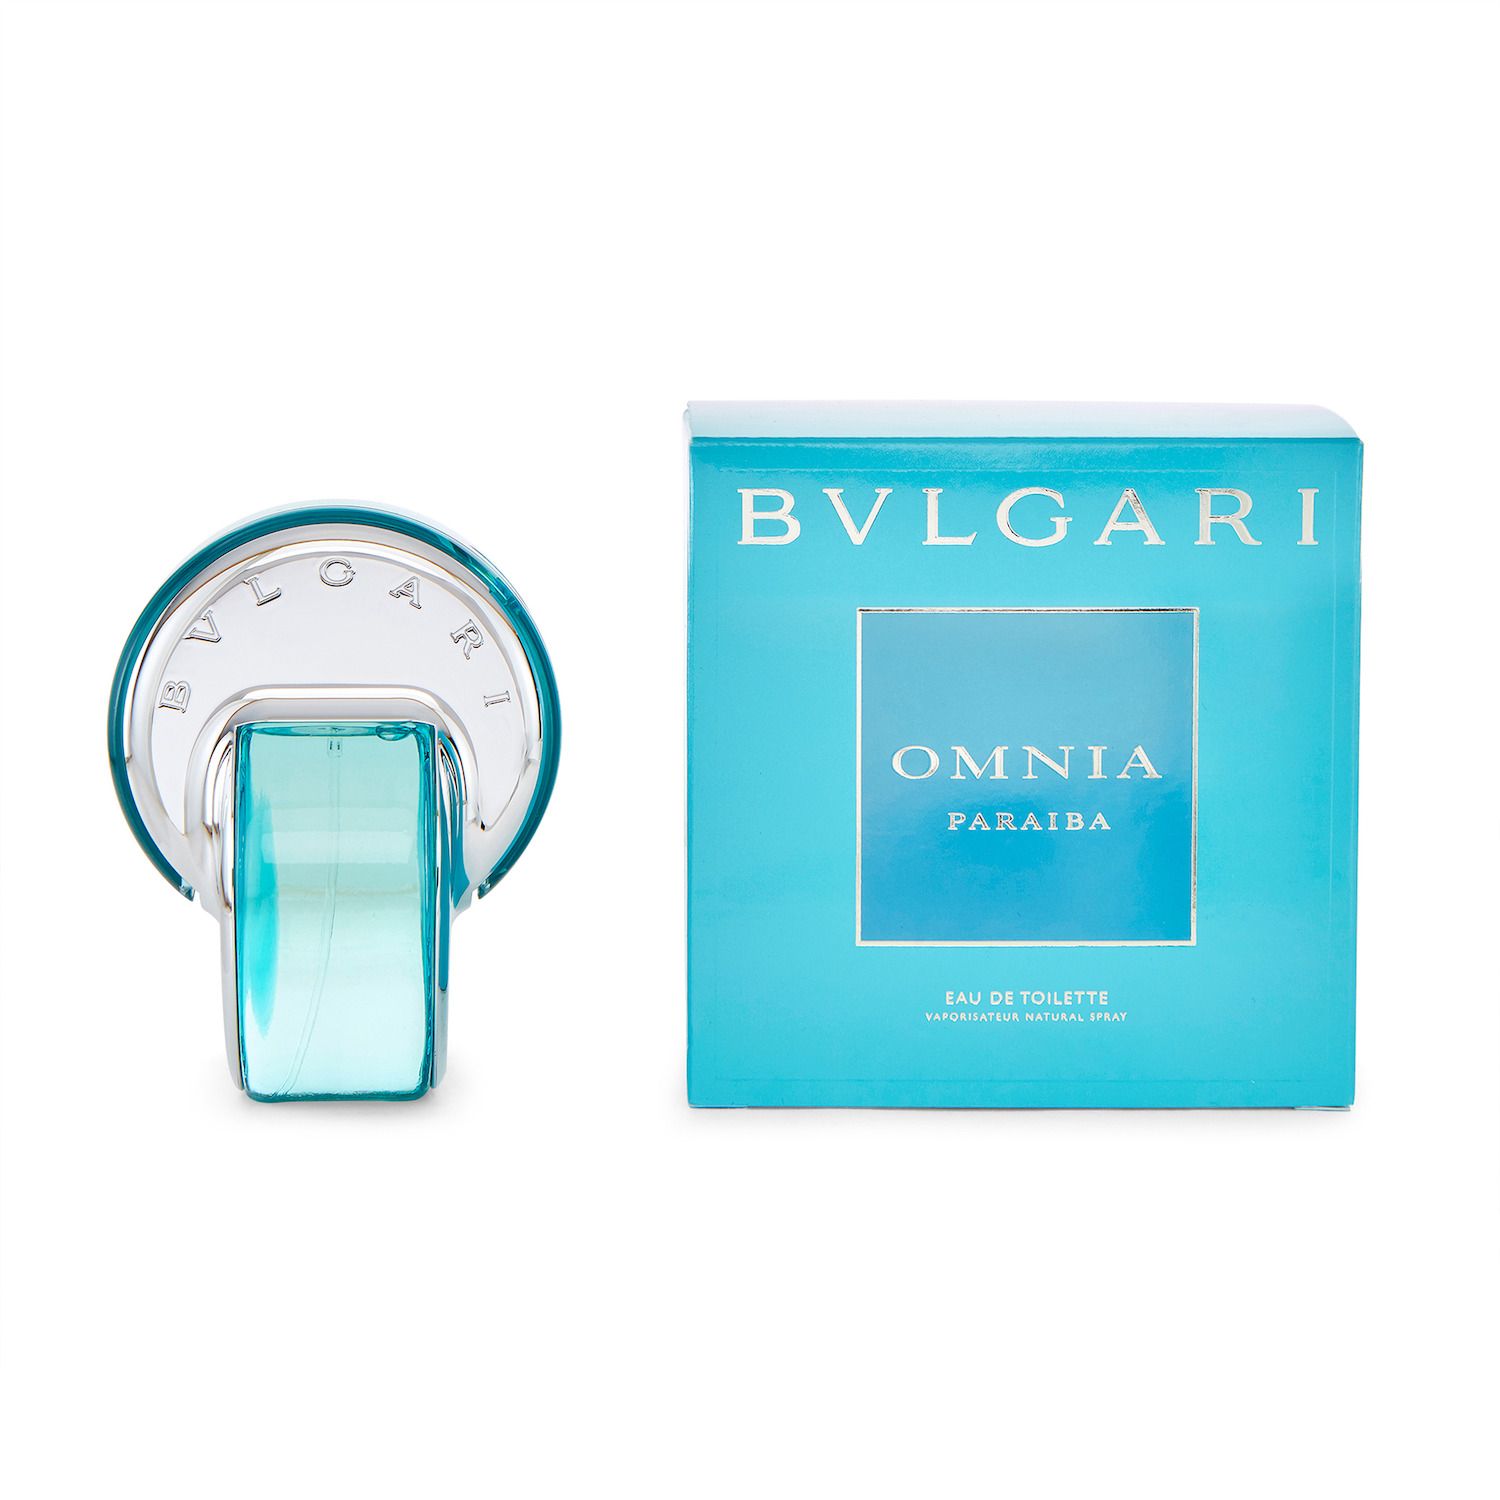 Bvlgari Omnia Paraiba Women's Perfume 